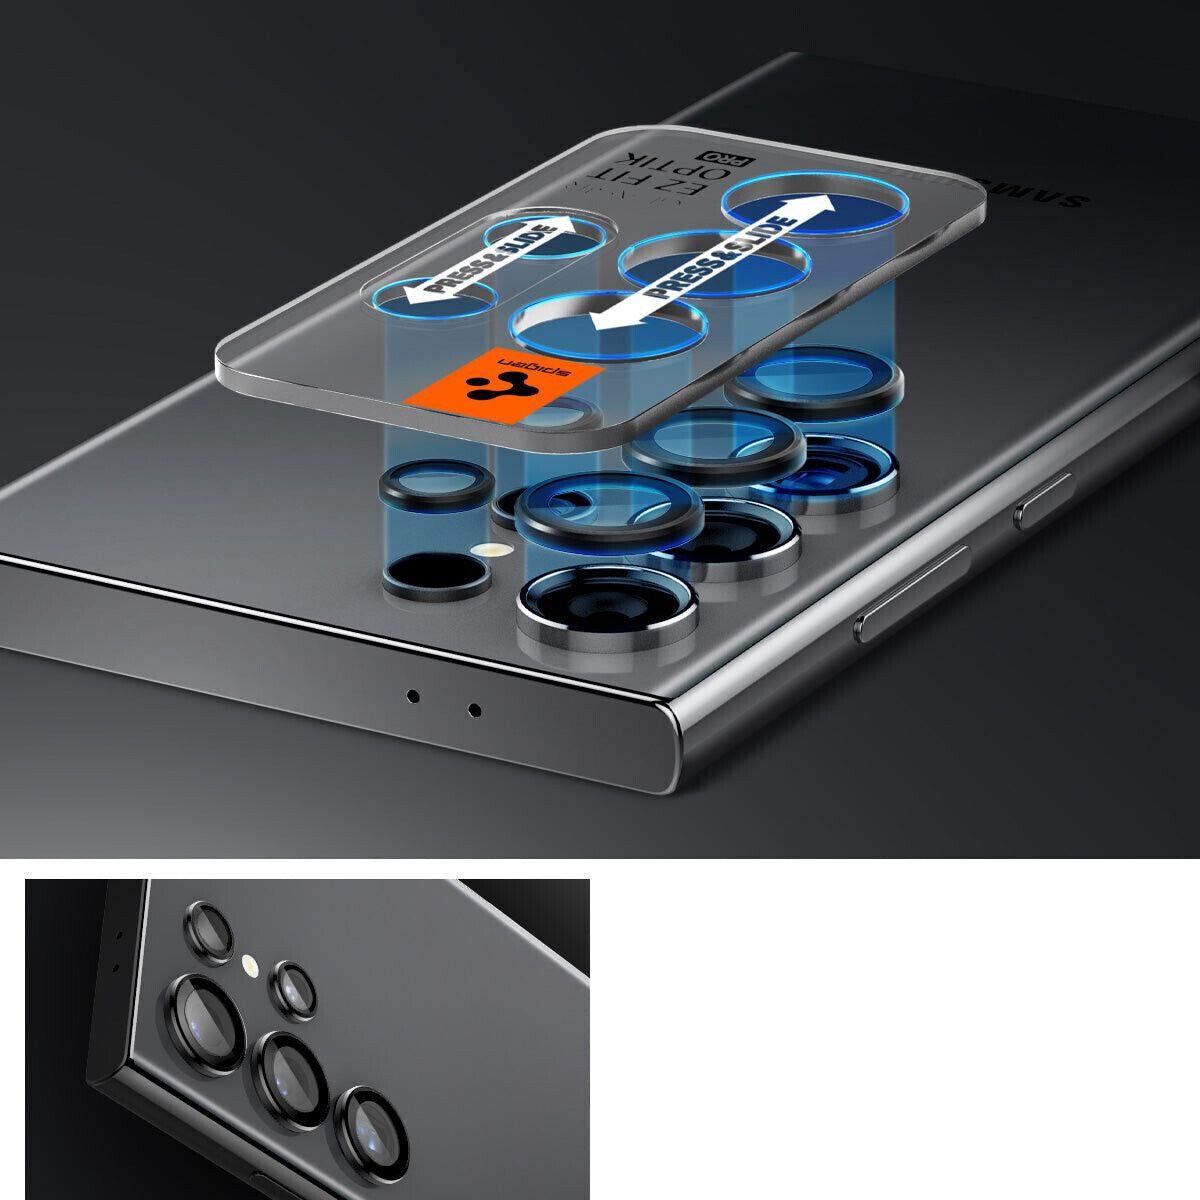 Spigen Glass tR EZ Fit Optik Pro 2 Pack Black (Galaxy S24 Ultra